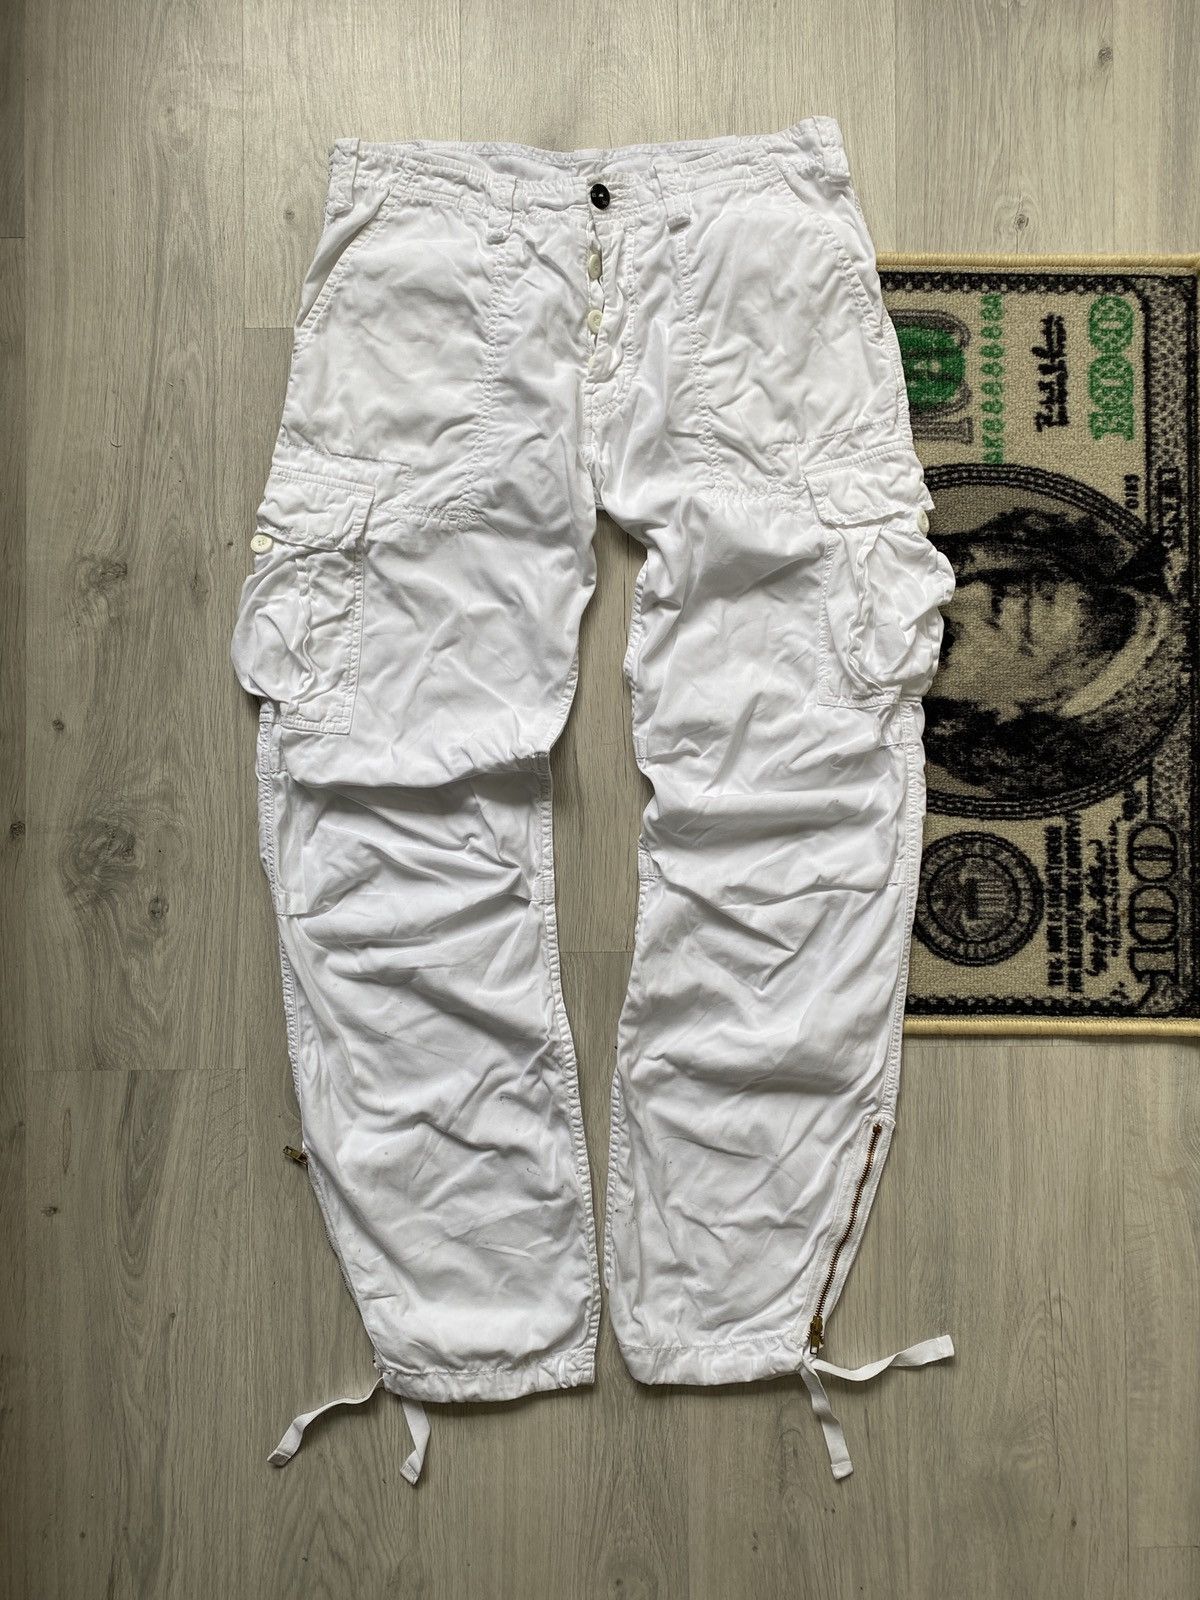 Japanese Brand Japan rags cargo pants | Grailed